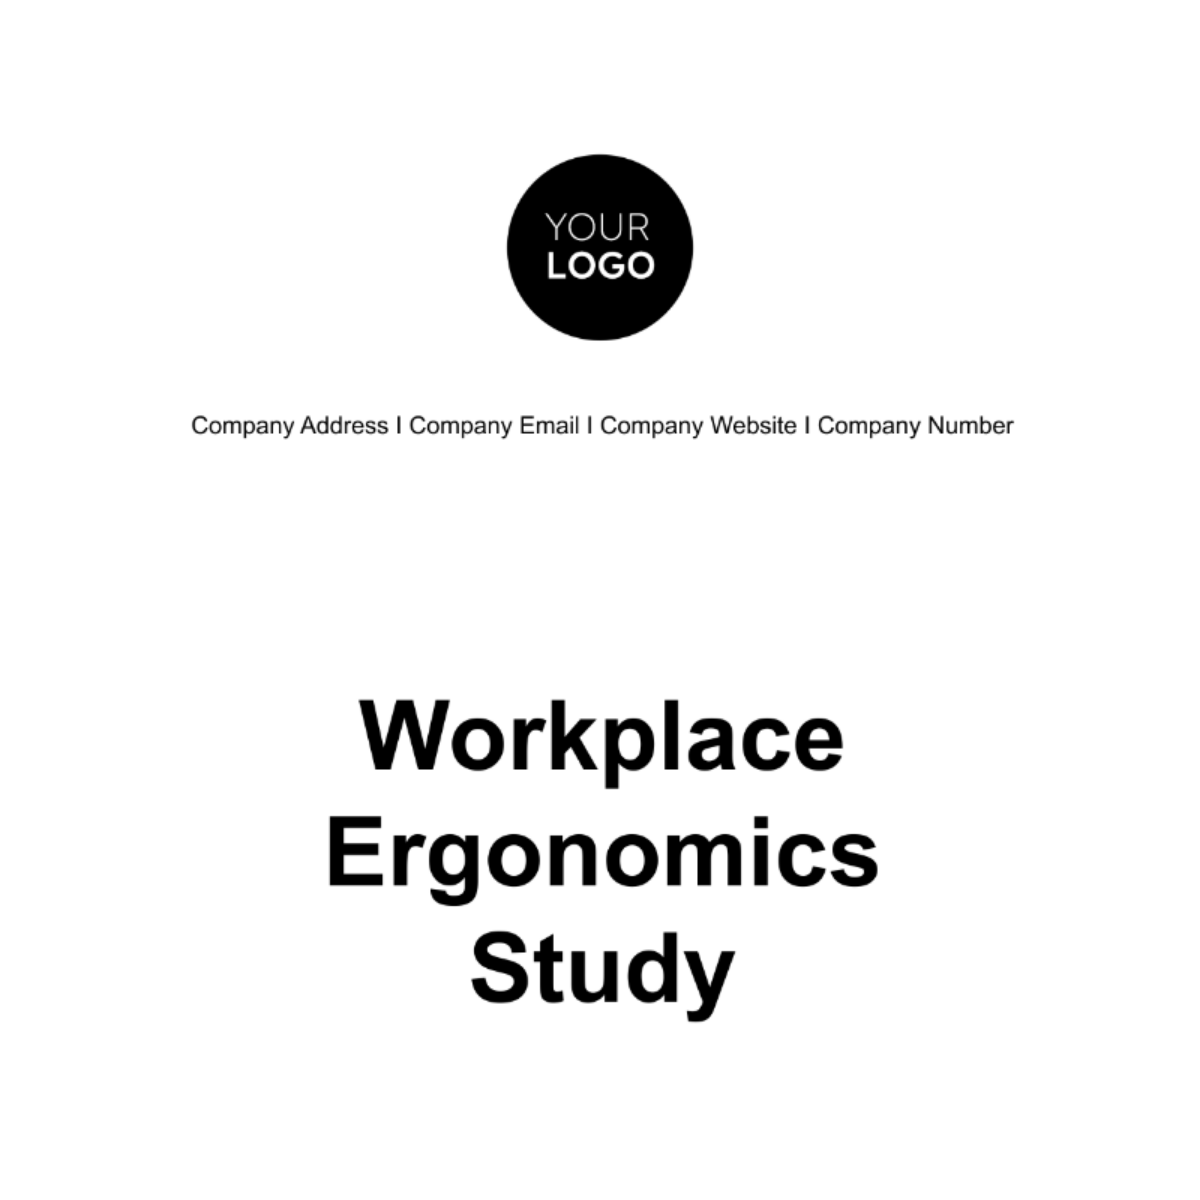 Free Workplace Ergonomics Study HR Template